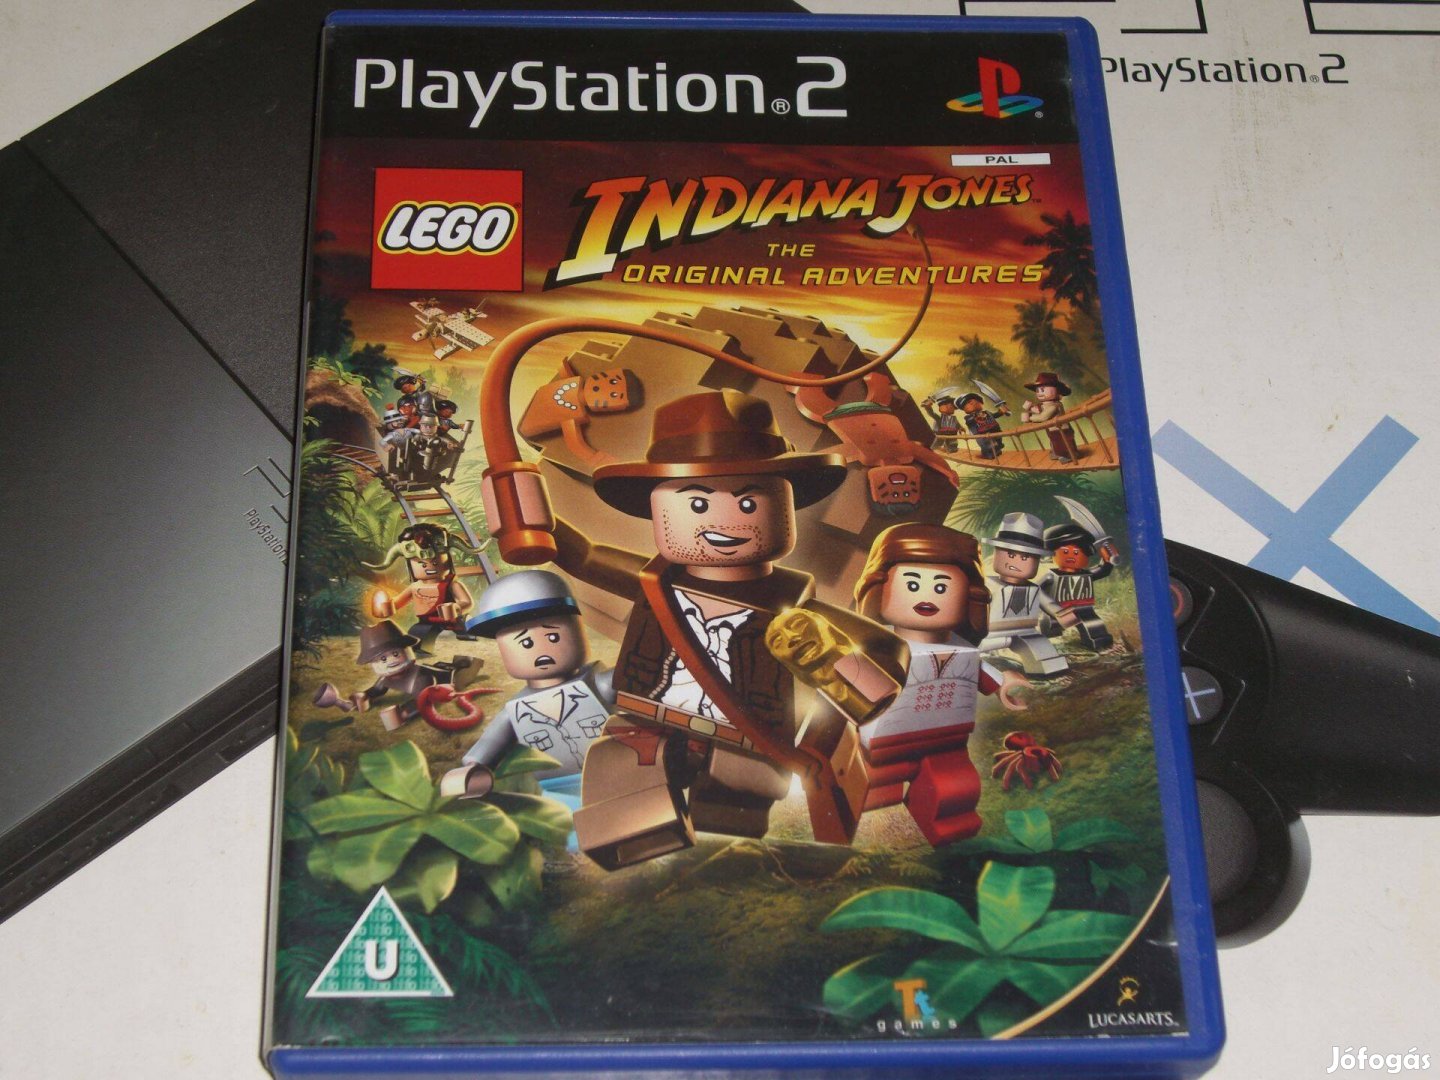 Lego Indiana Jones Playstation 2 eredeti lemez eladó